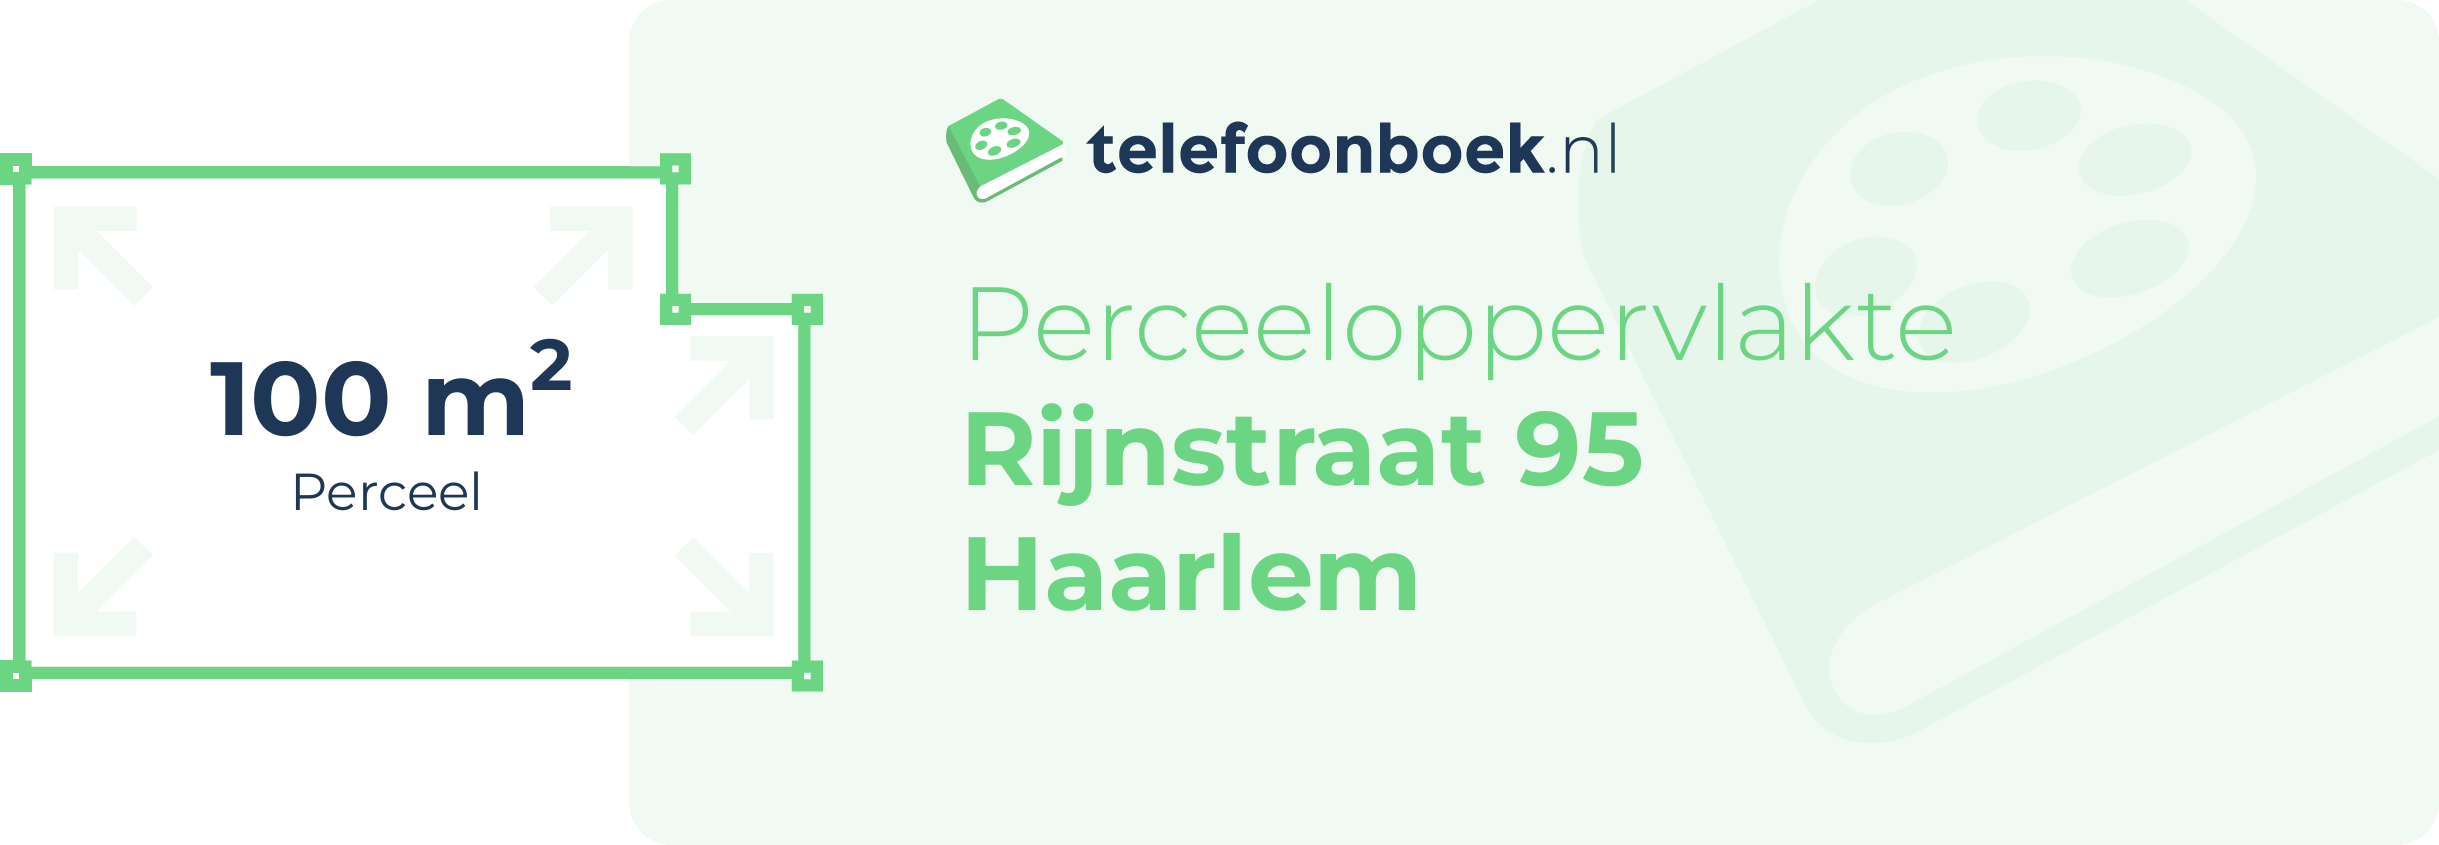 Perceeloppervlakte Rijnstraat 95 Haarlem